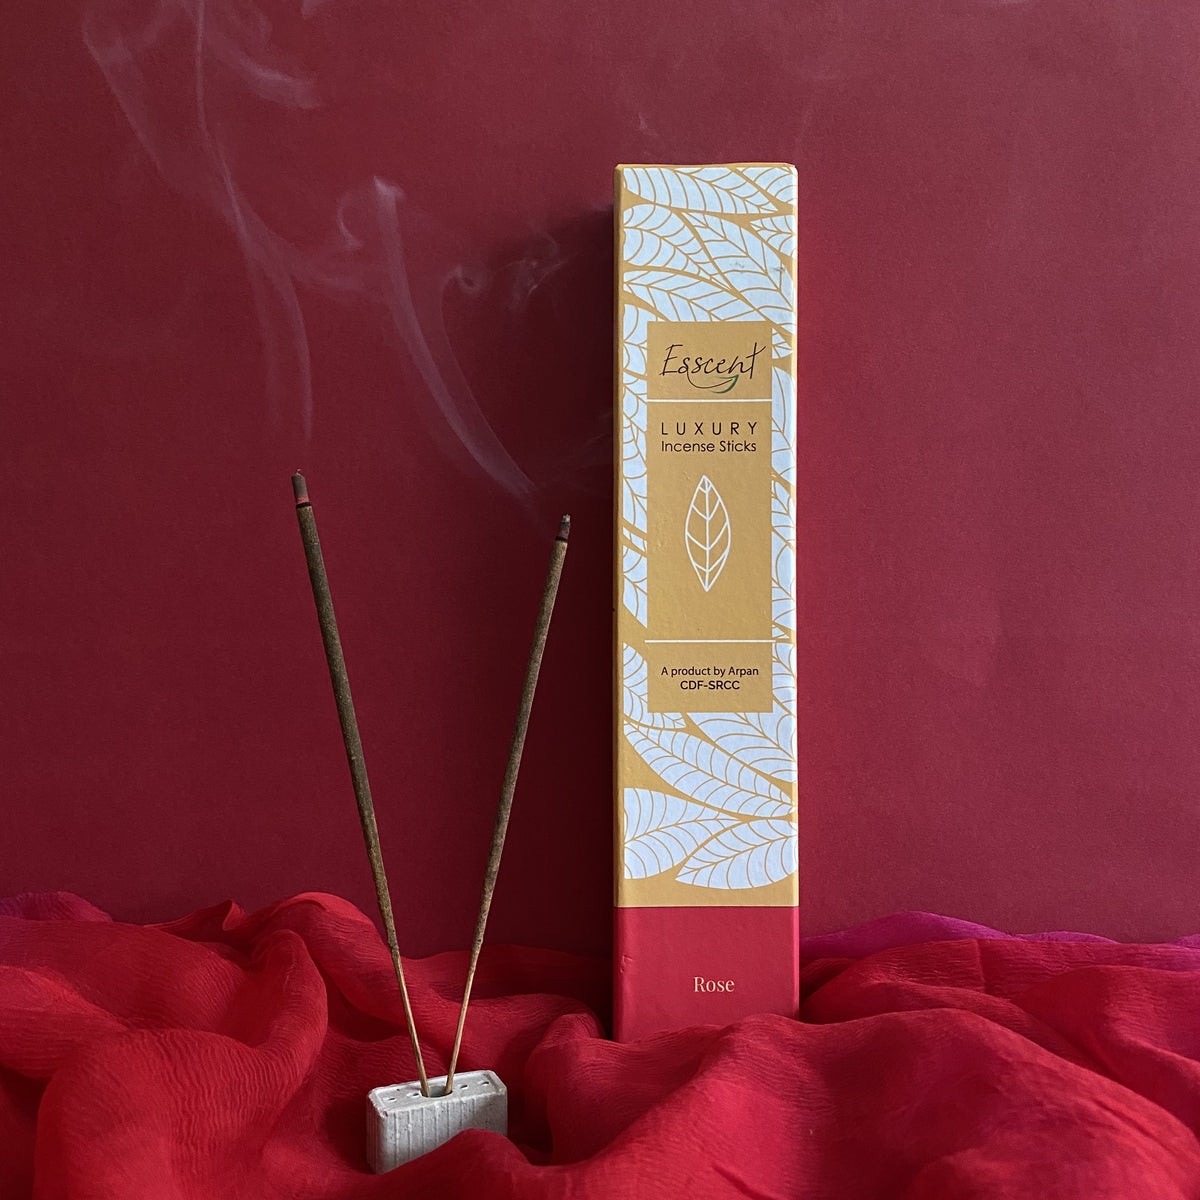 Rose Premium Flower-based Incense Sticks